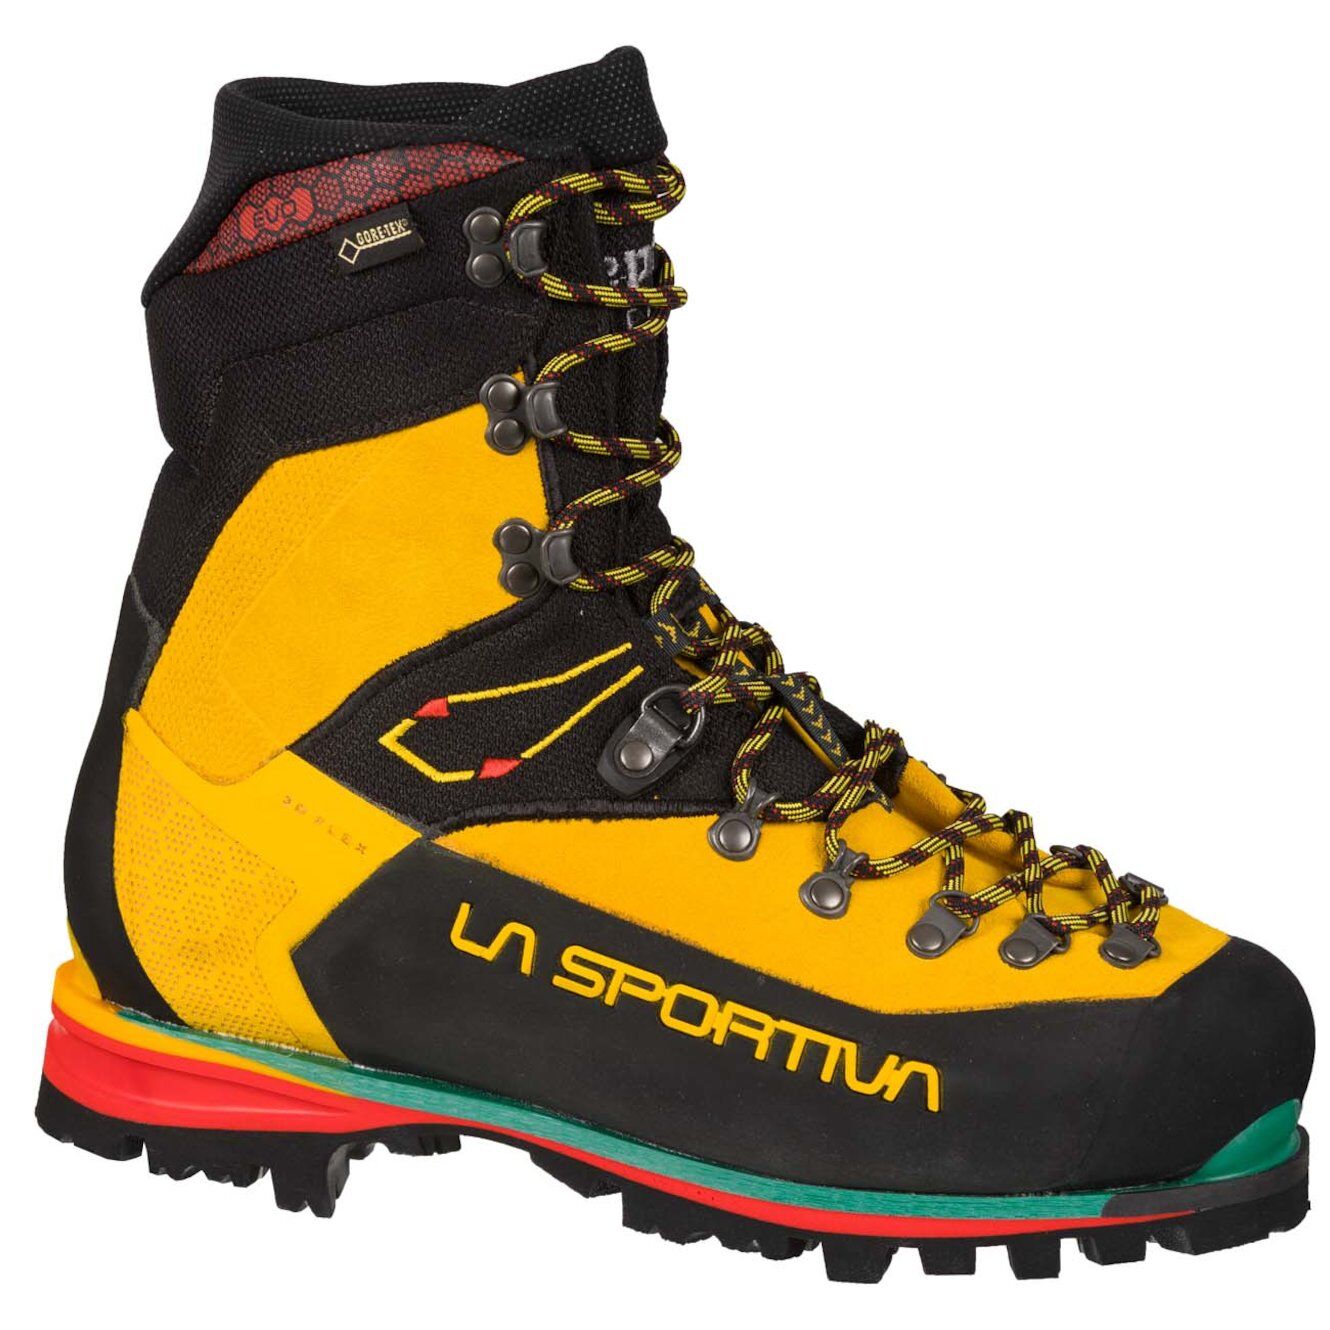 La Sportiva Nepal Evo GTX - Mountaineering Boots - Men's